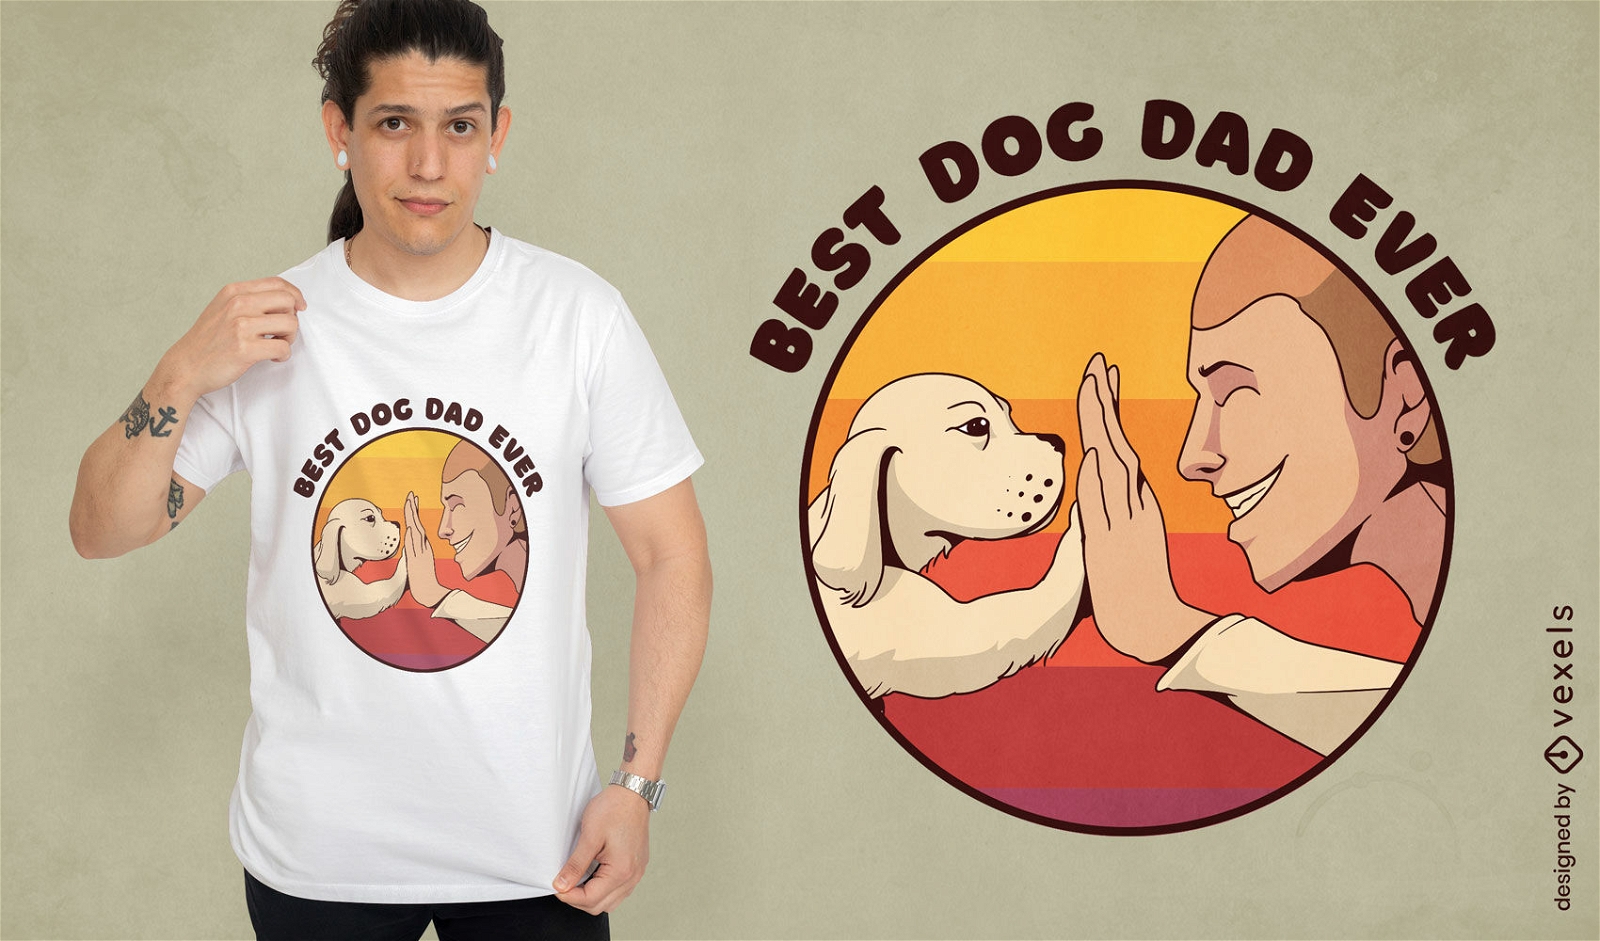 Dog dad retro sunset t-shirt design